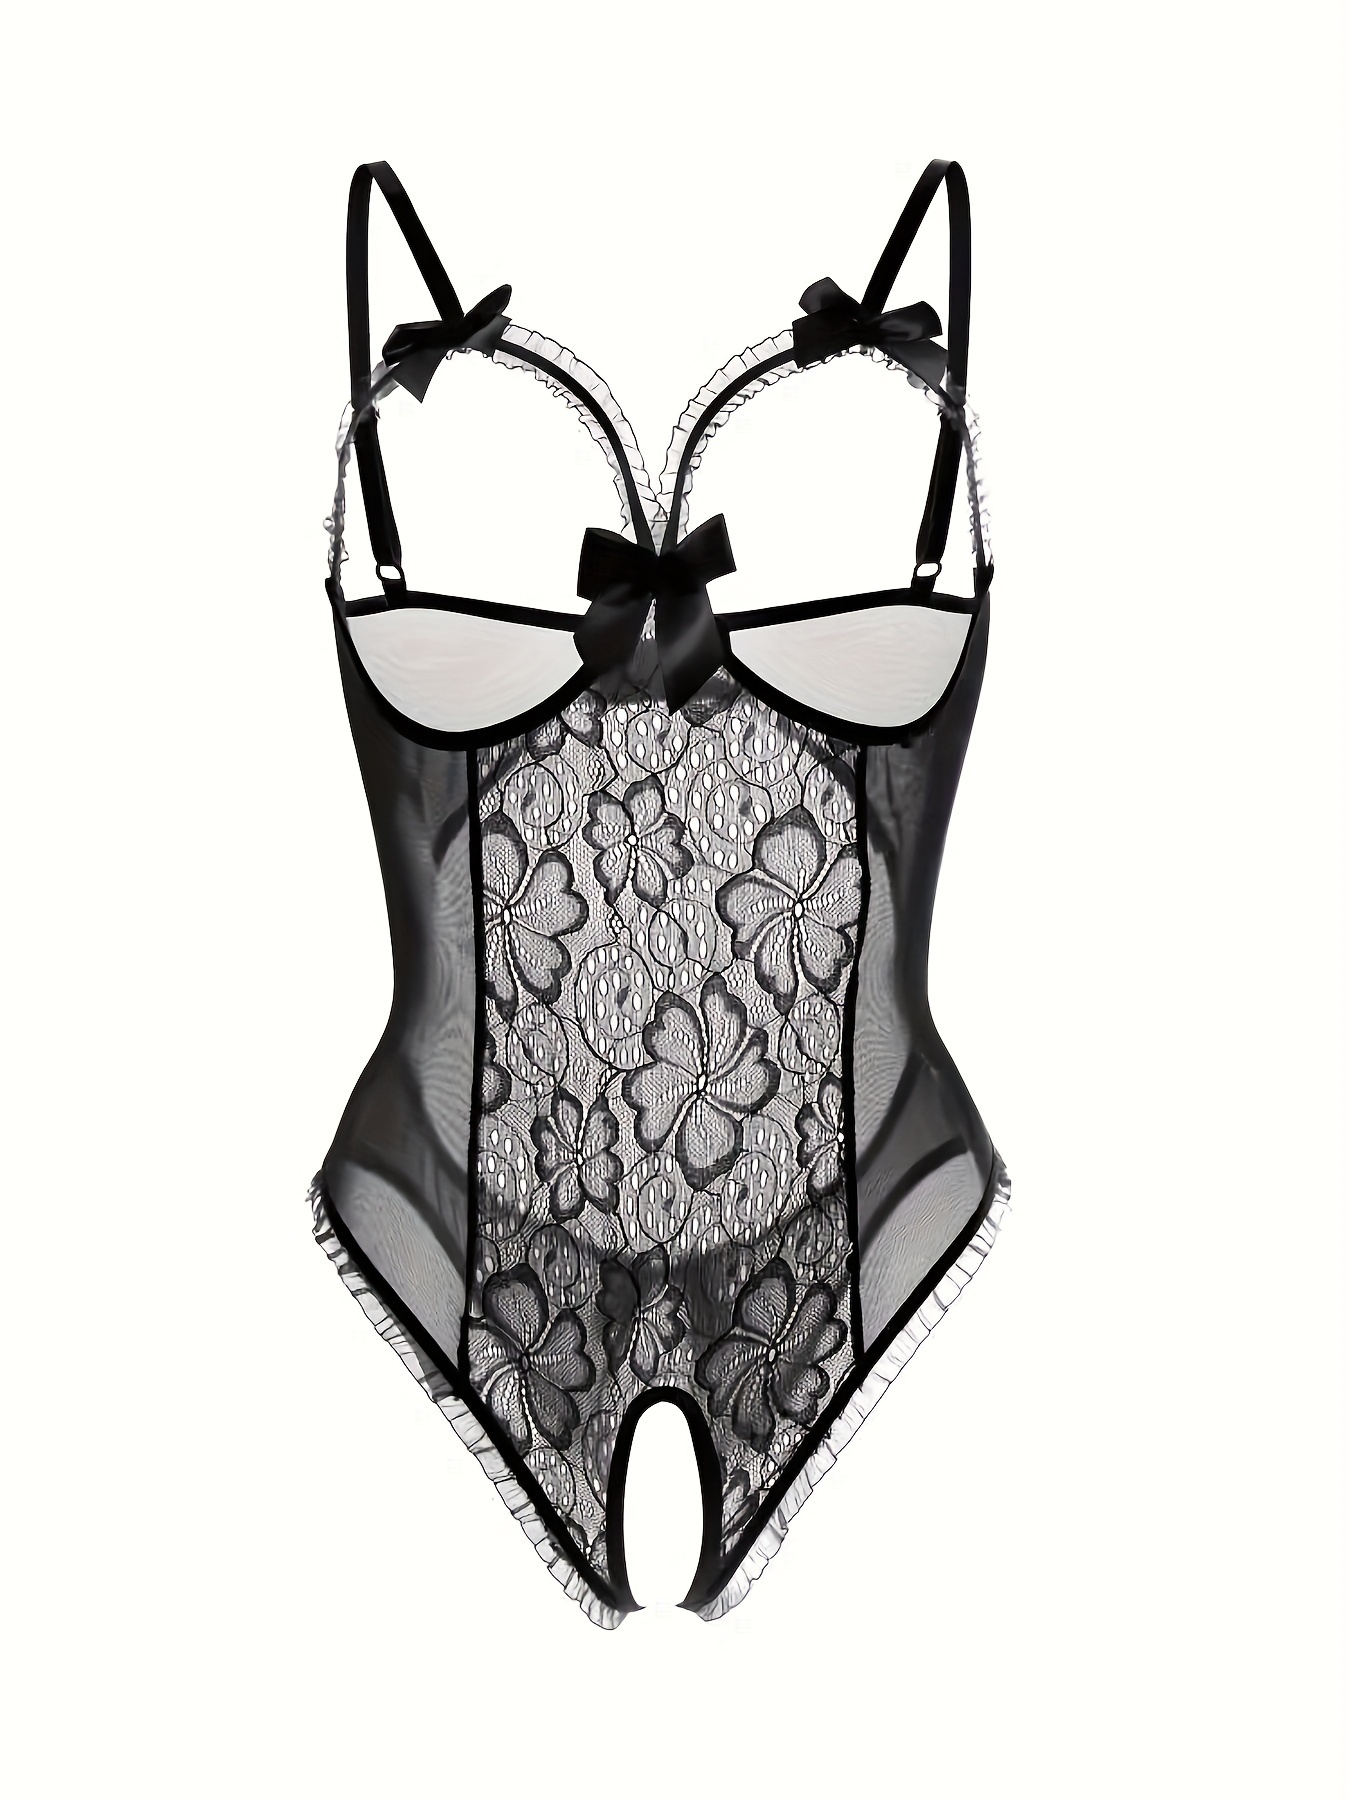 Bra Panties Set for Women with Garter Belt Fashion Women Lingerie Bikini  Babydoll Nightwear Open Crotch#01, Black, XX-Large : : Clothing,  Shoes & Accessories